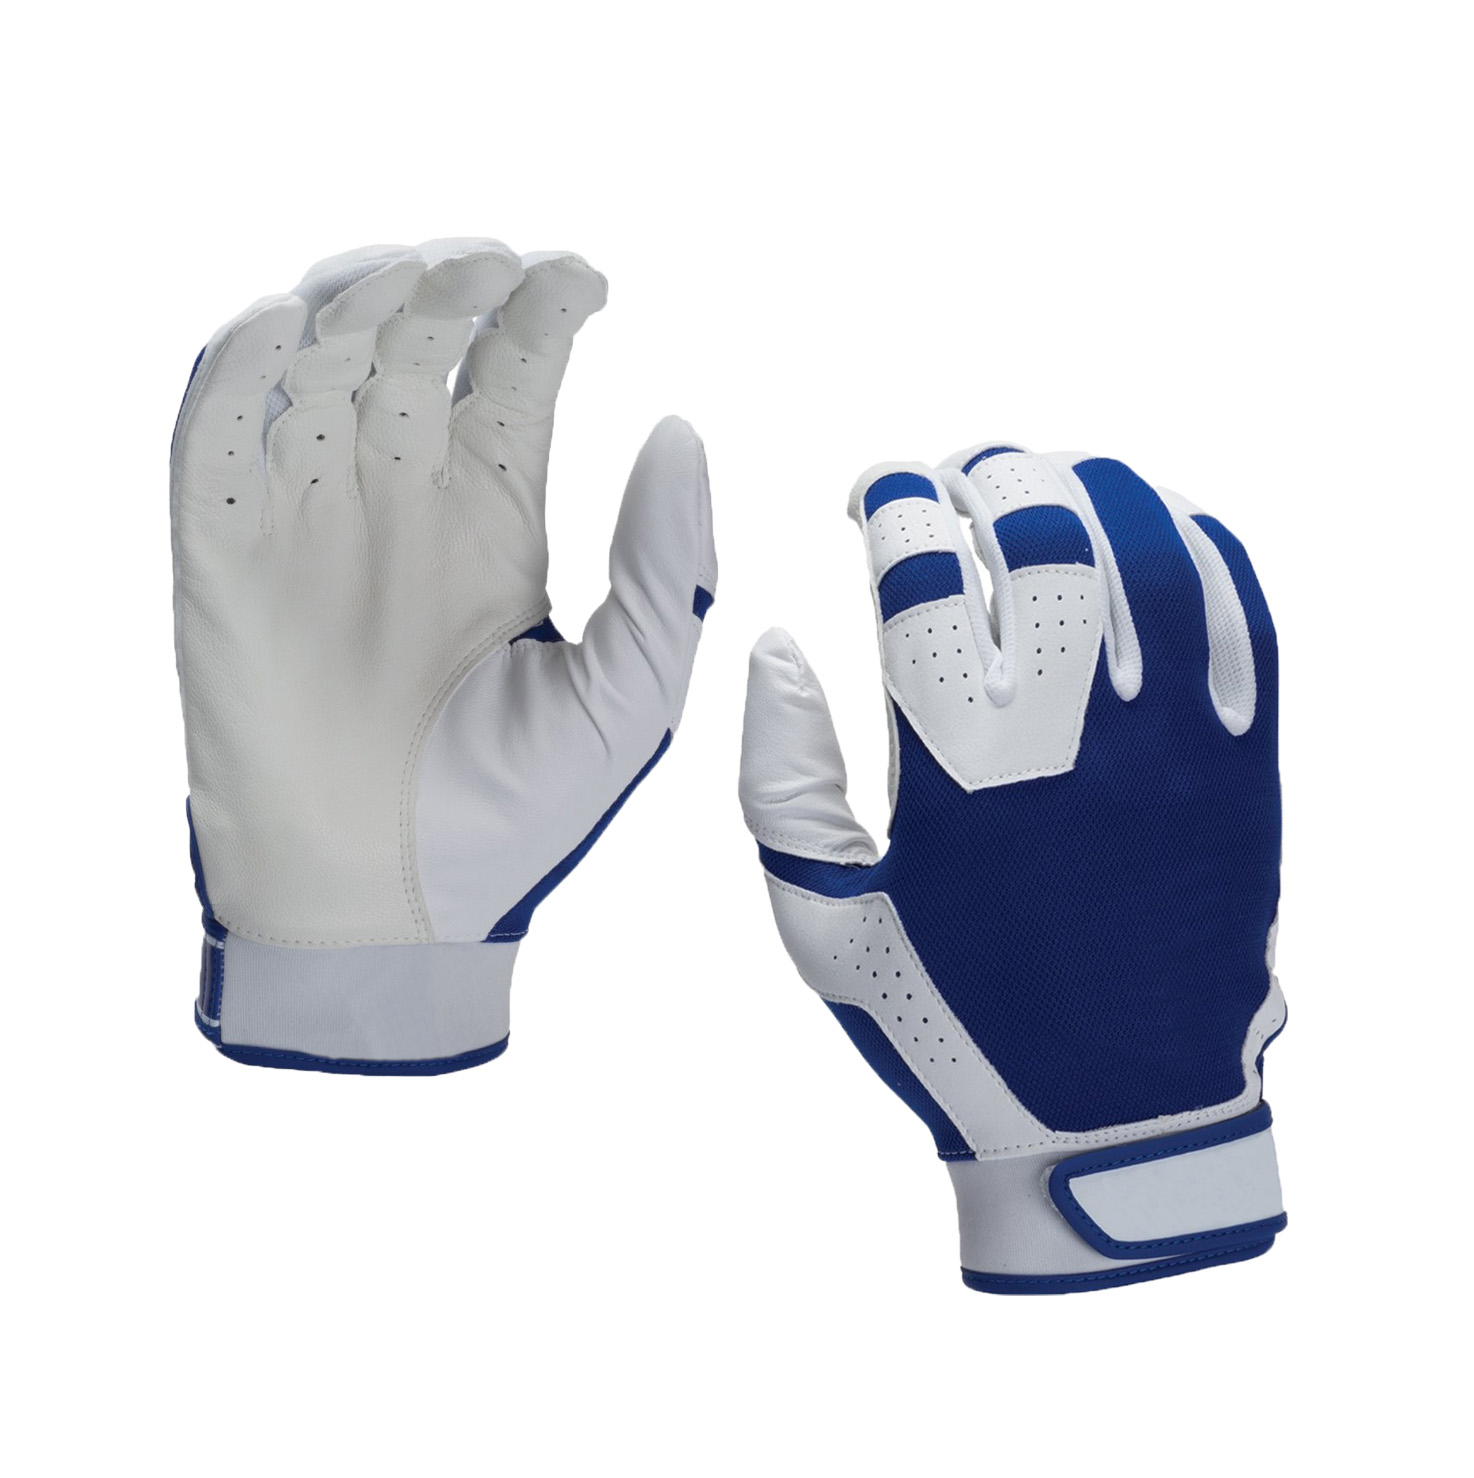 Durable Genuine leather Batting gloves professional youth baseball batting gloves